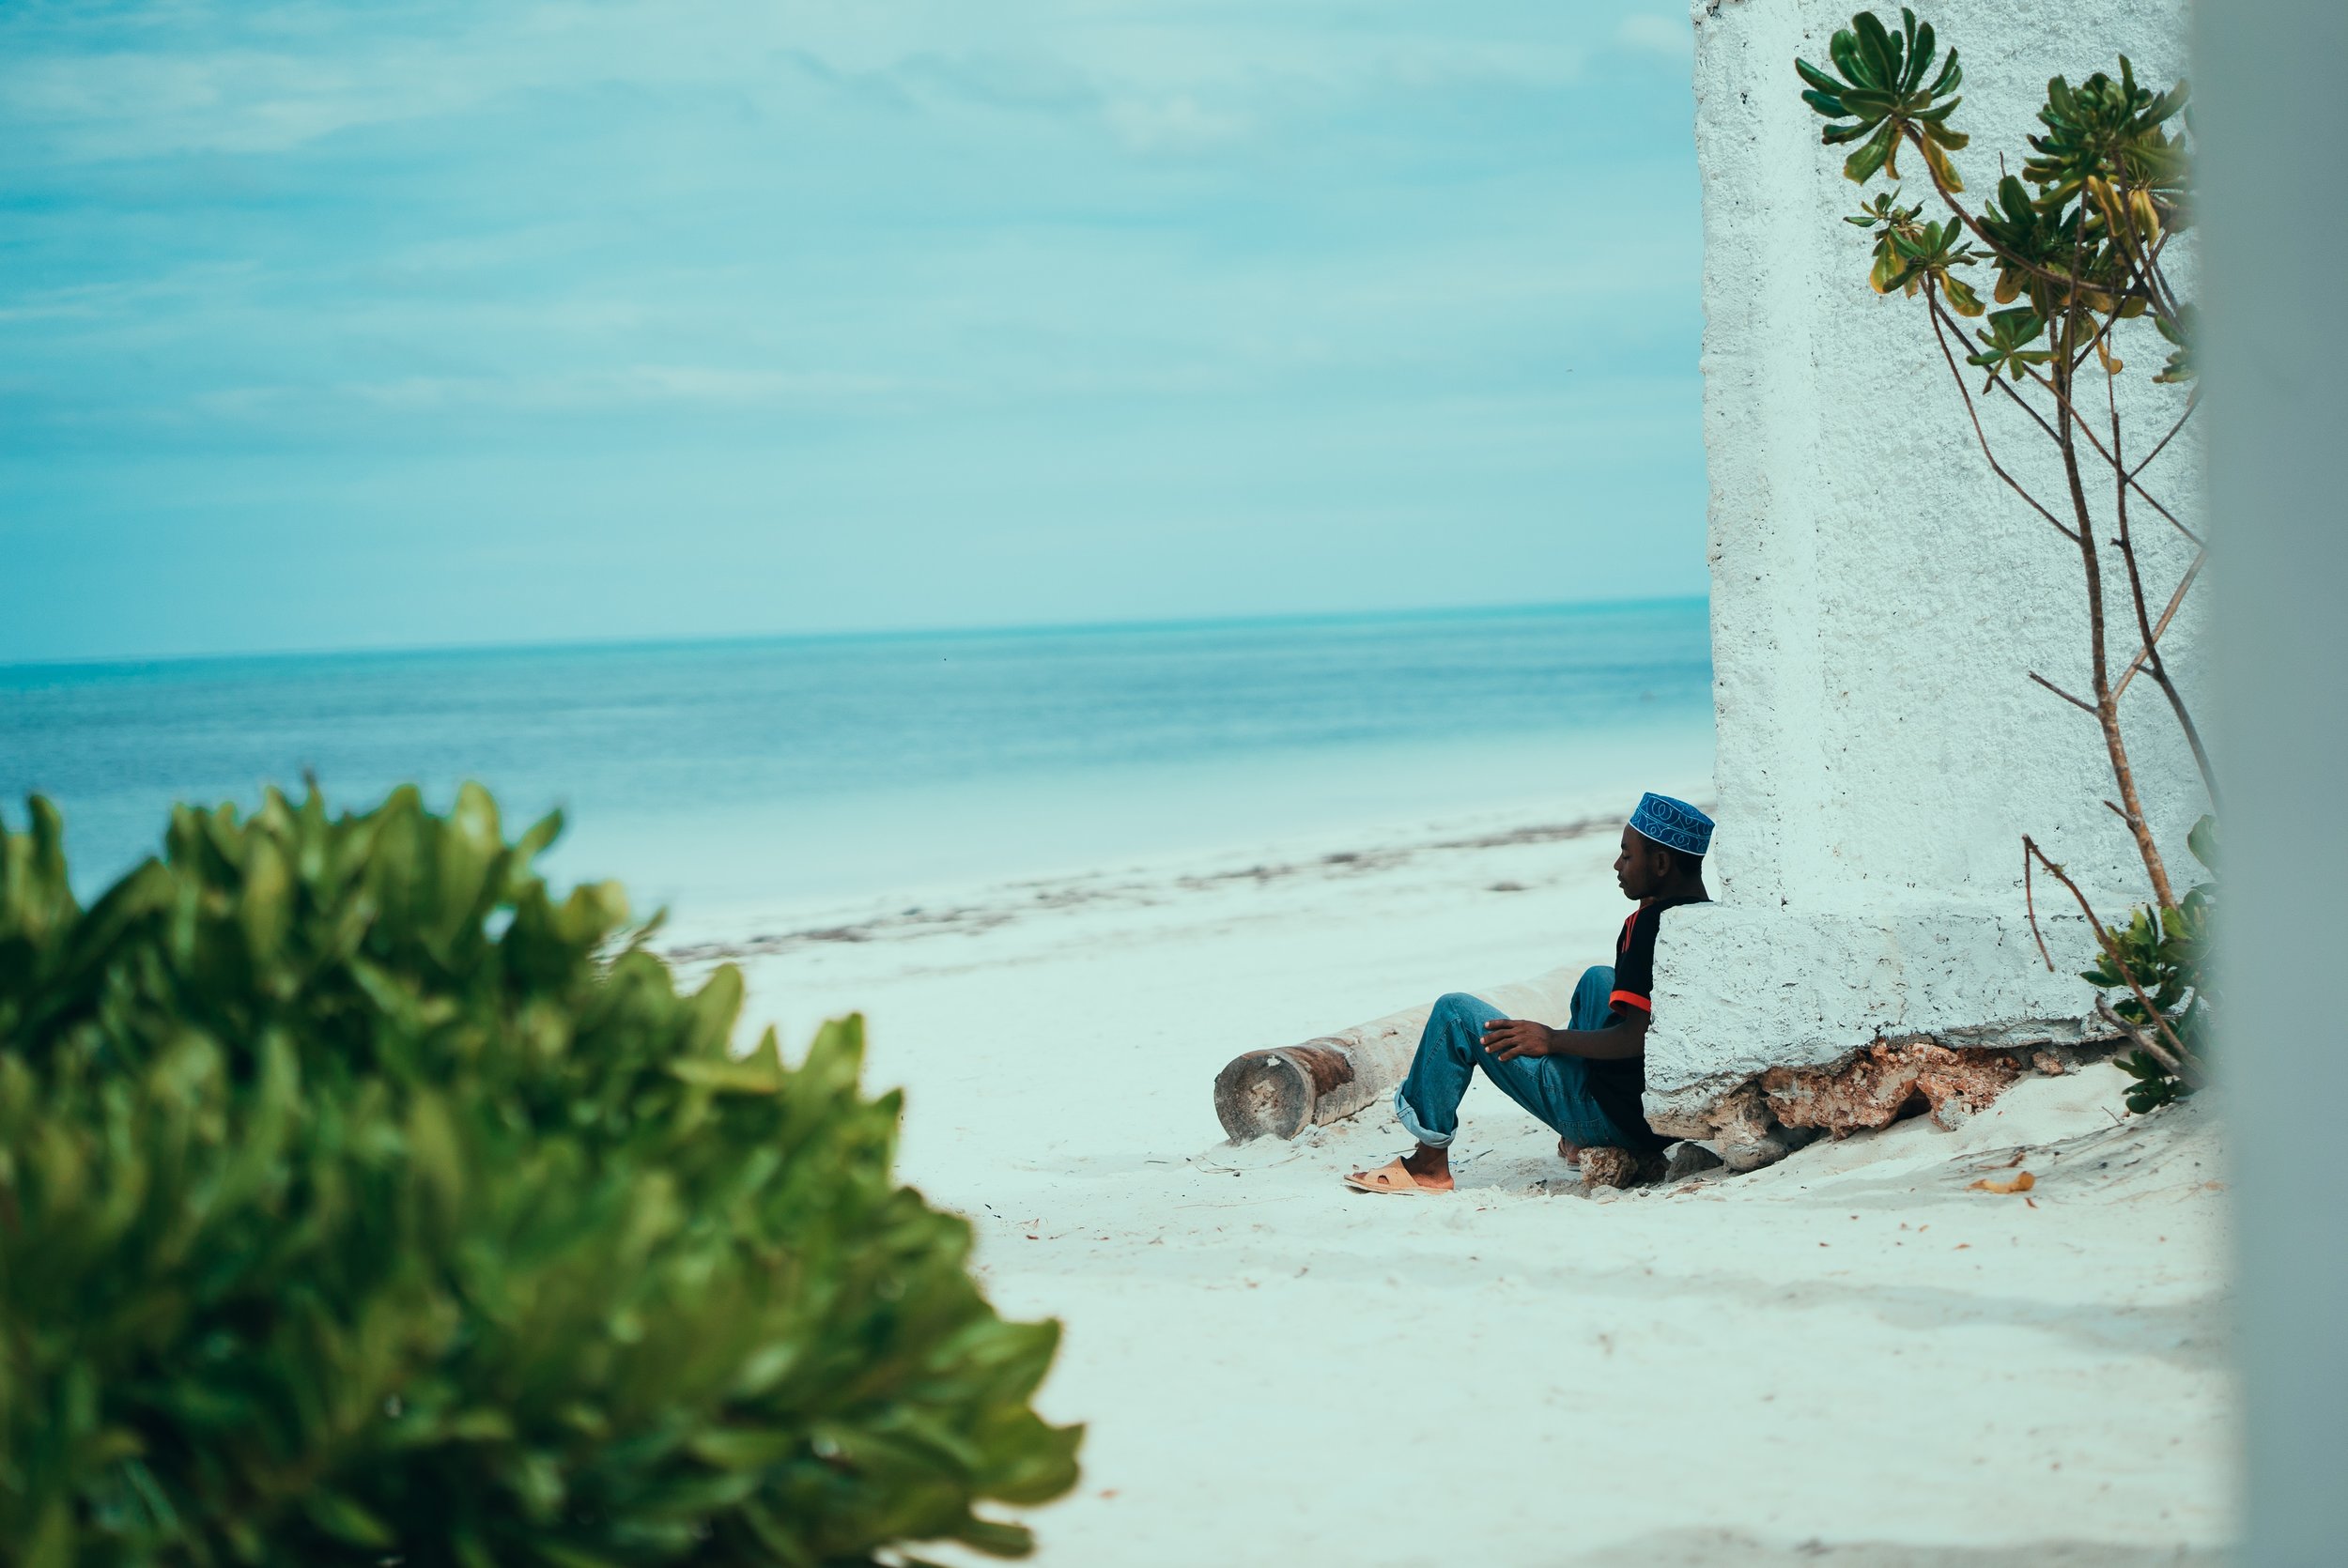 Zanzibar-1660434-unsplash.jpg